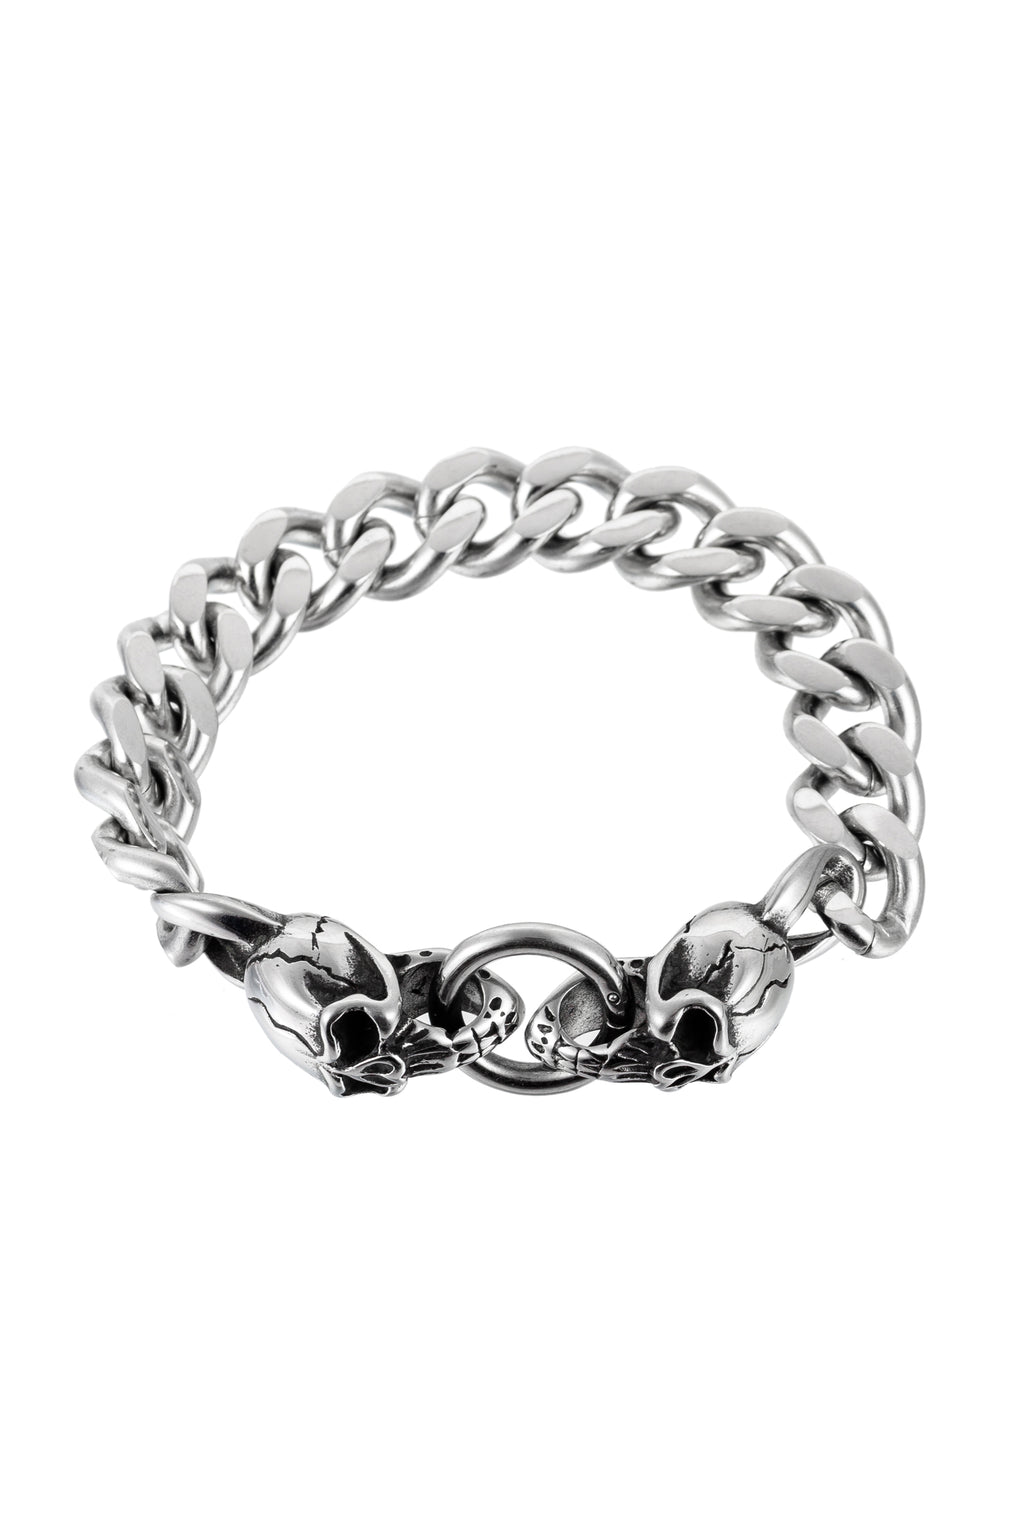 Double skull titanium silver cuban link bracelet.